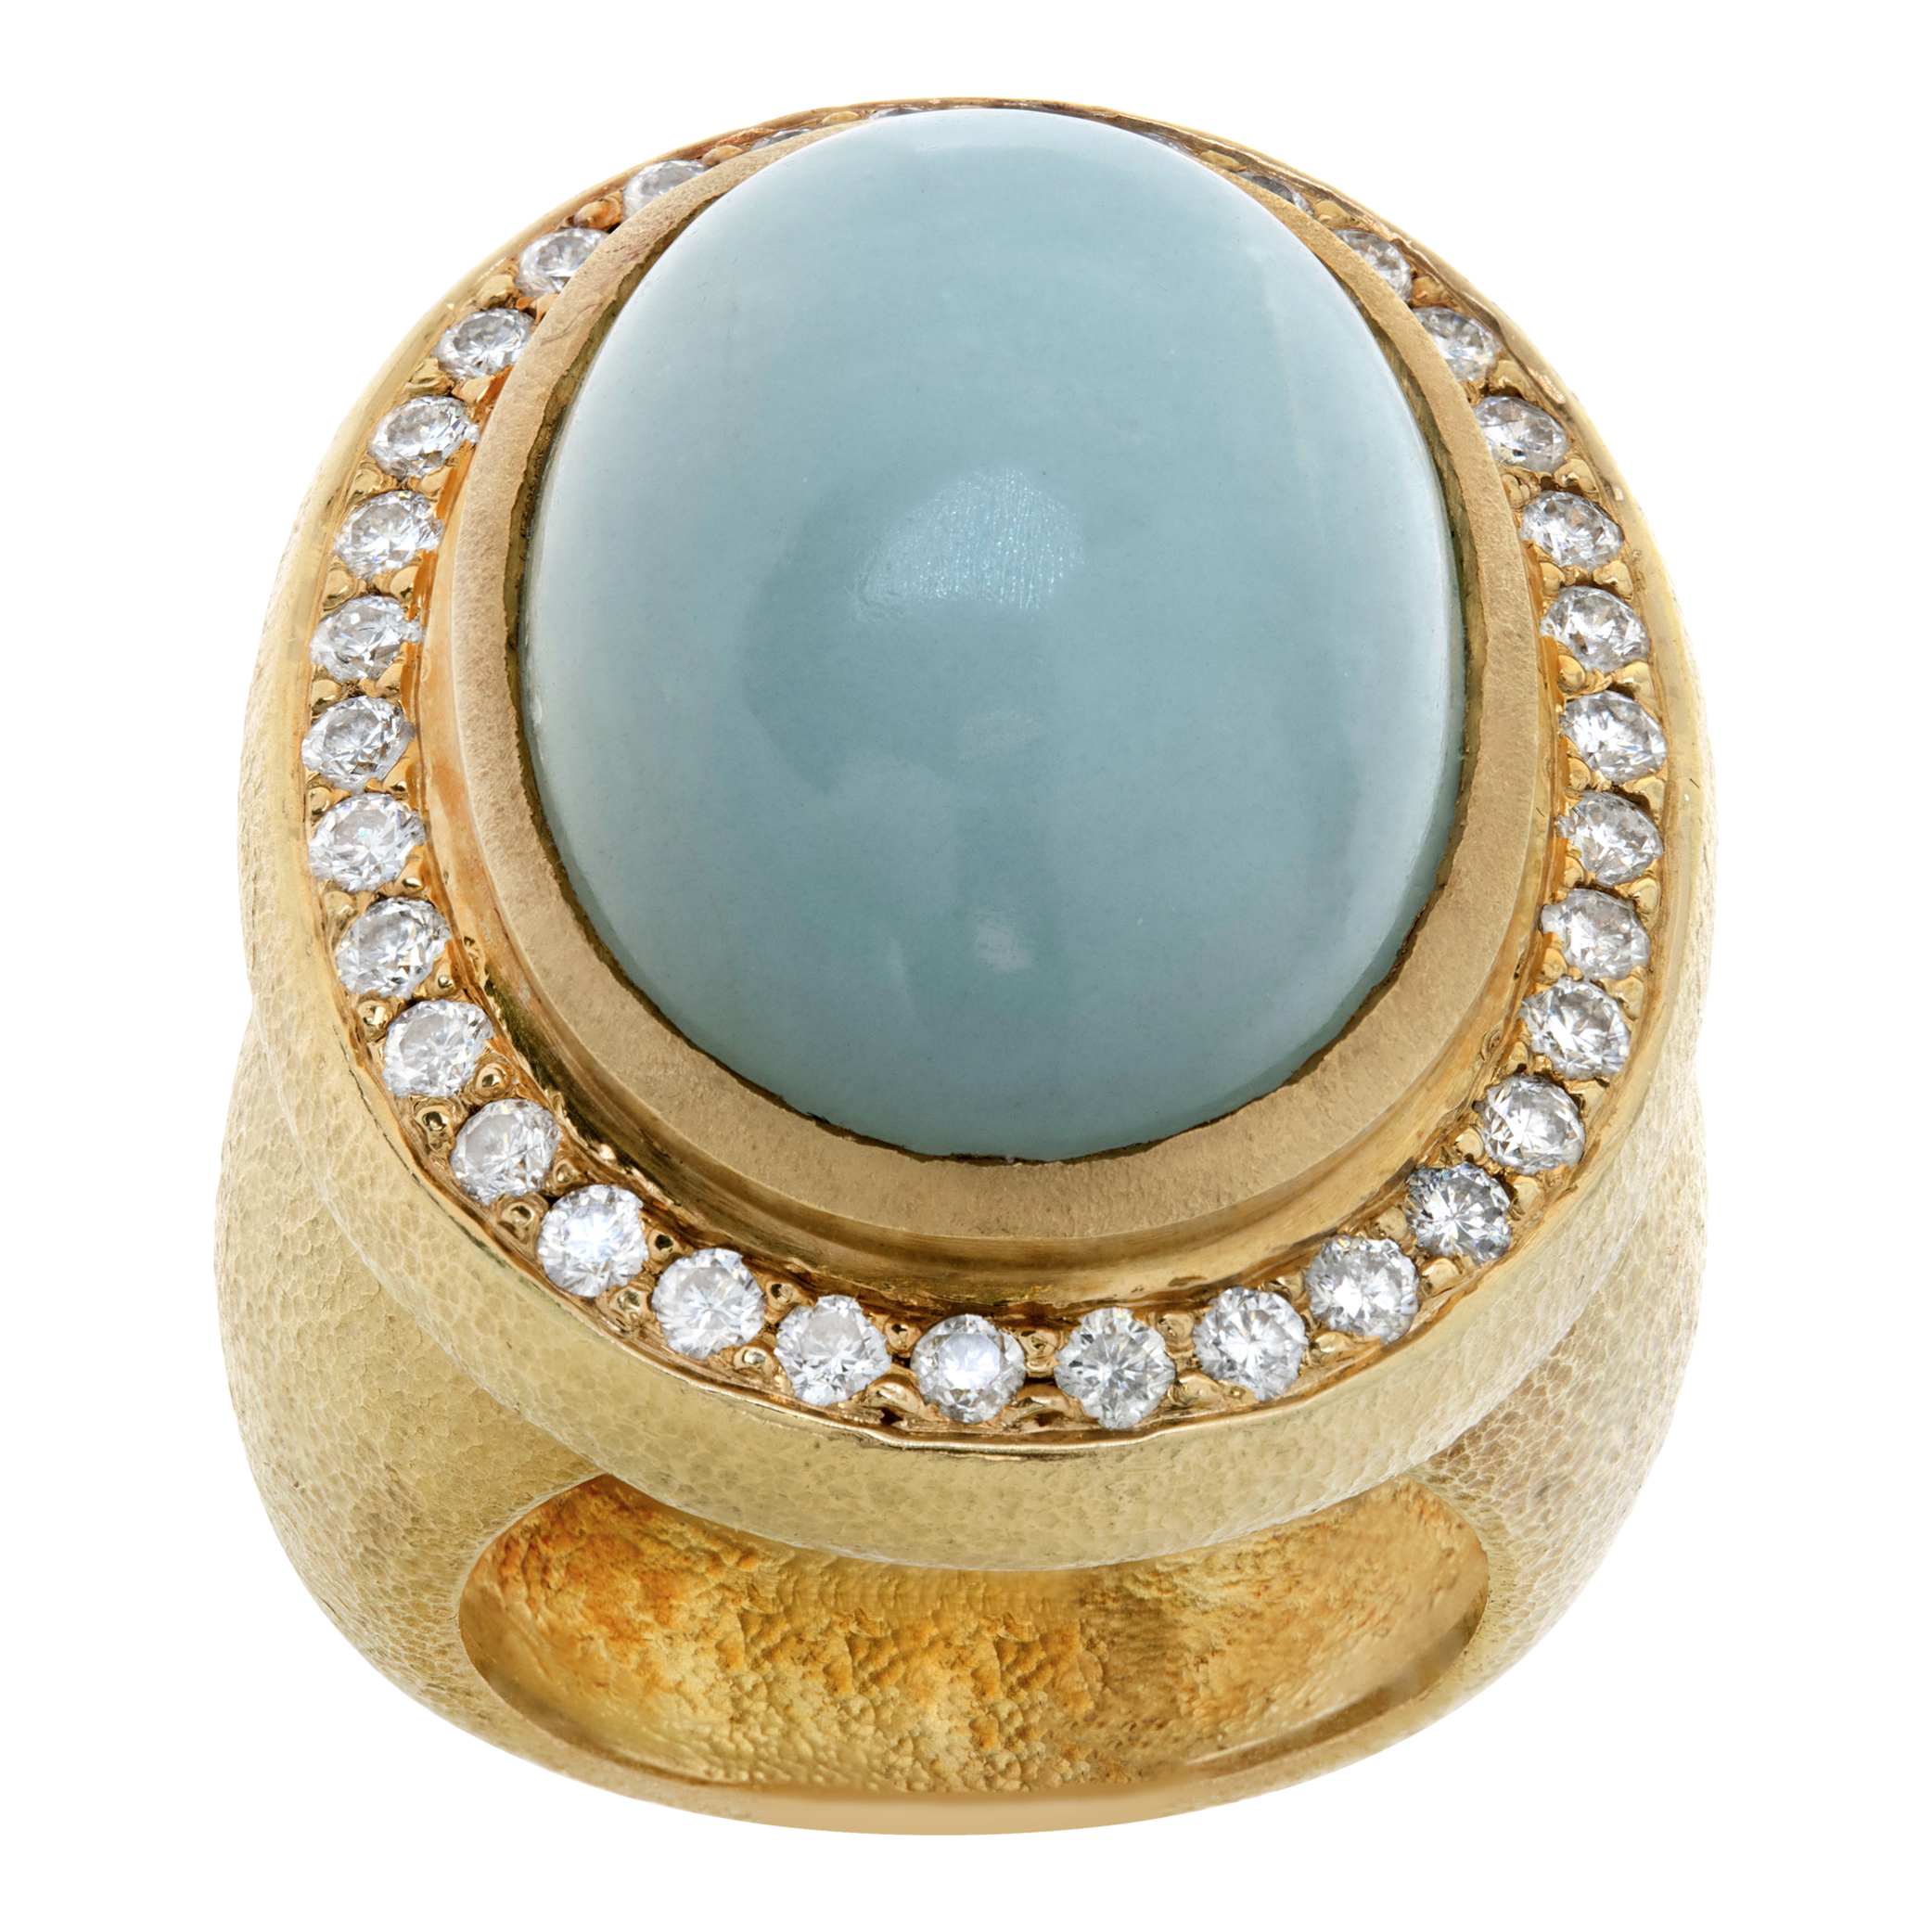 Seafoam chalcedony ring with 1 carat in diamonds (Stones)